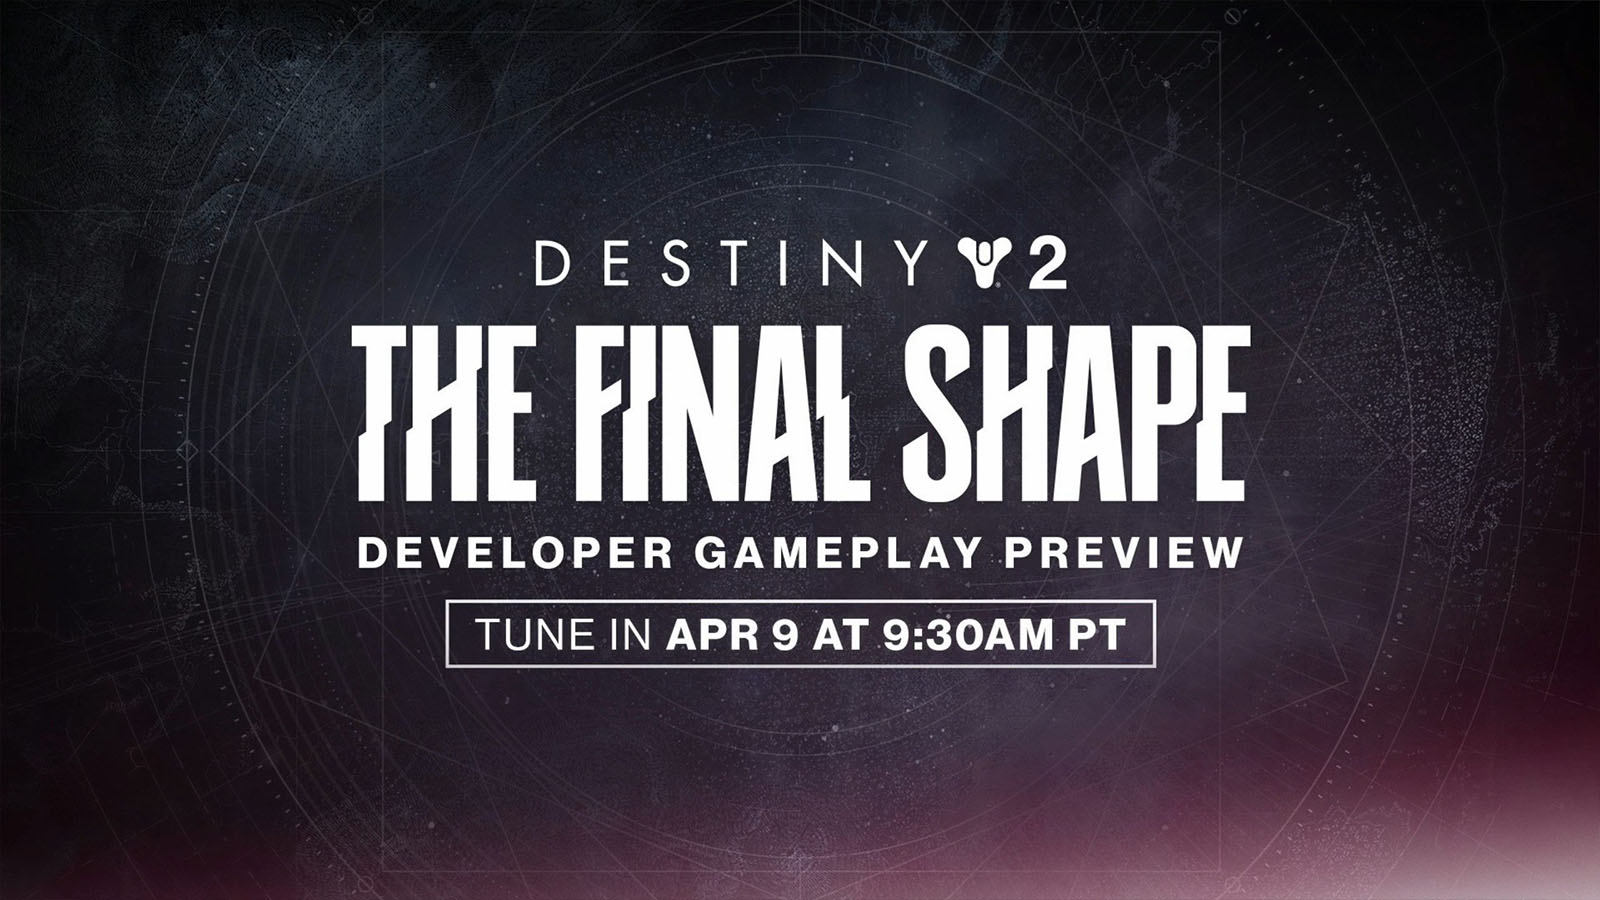 Destiny 2 Announces The Final Shape Gameplay Reveal Showcase